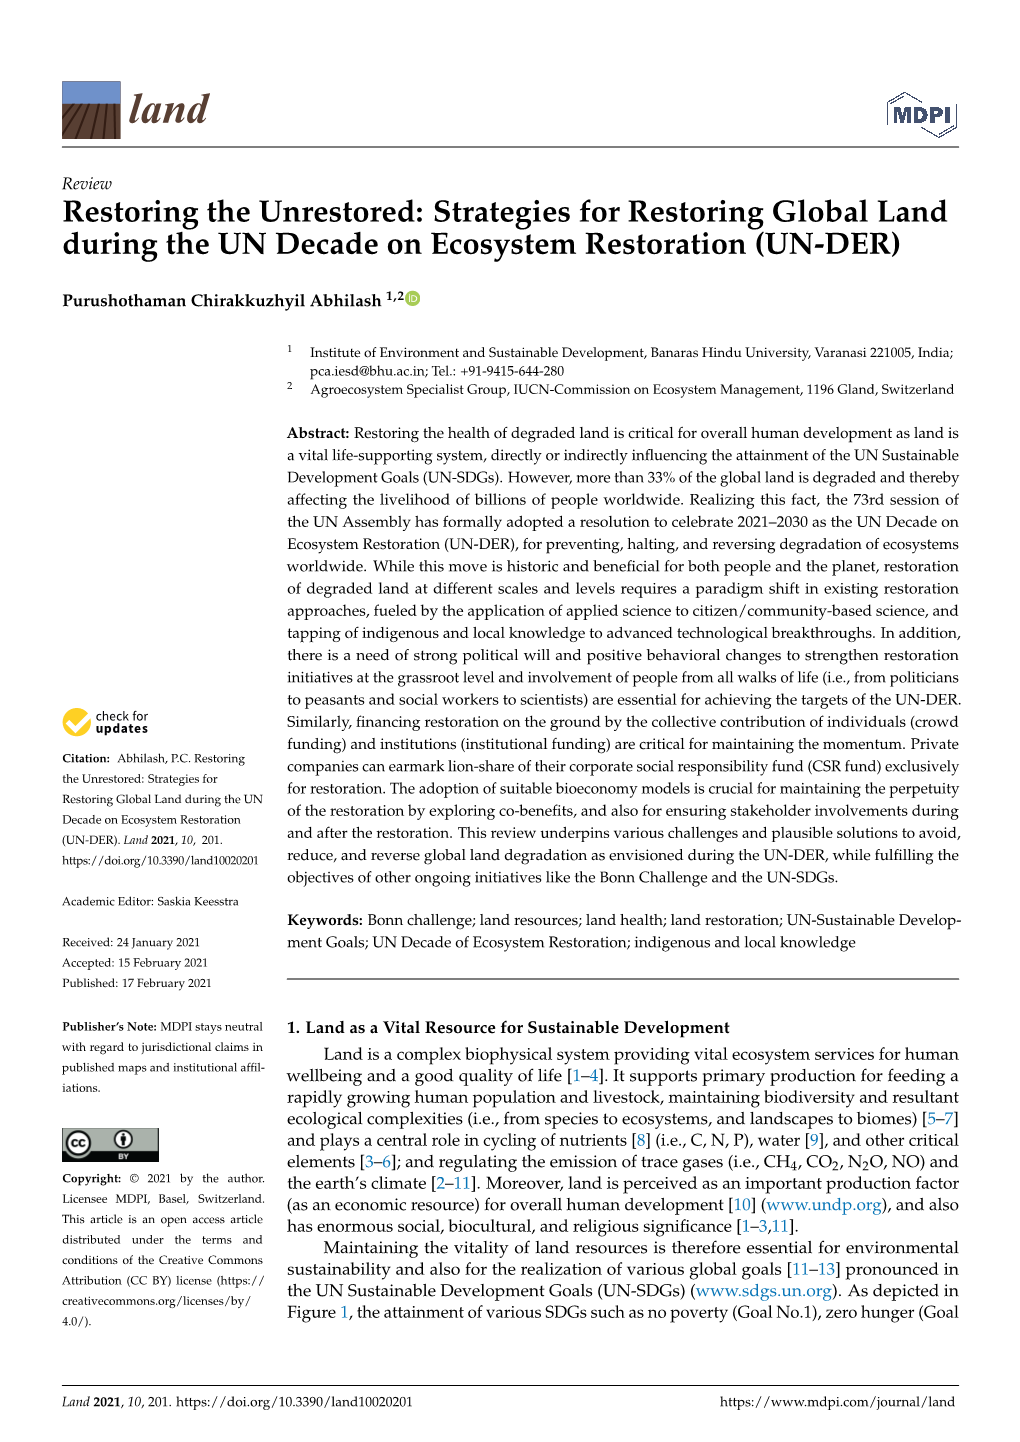 Strategies for Restoring Global Land During the UN Decade on Ecosystem Restoration (UN-DER)